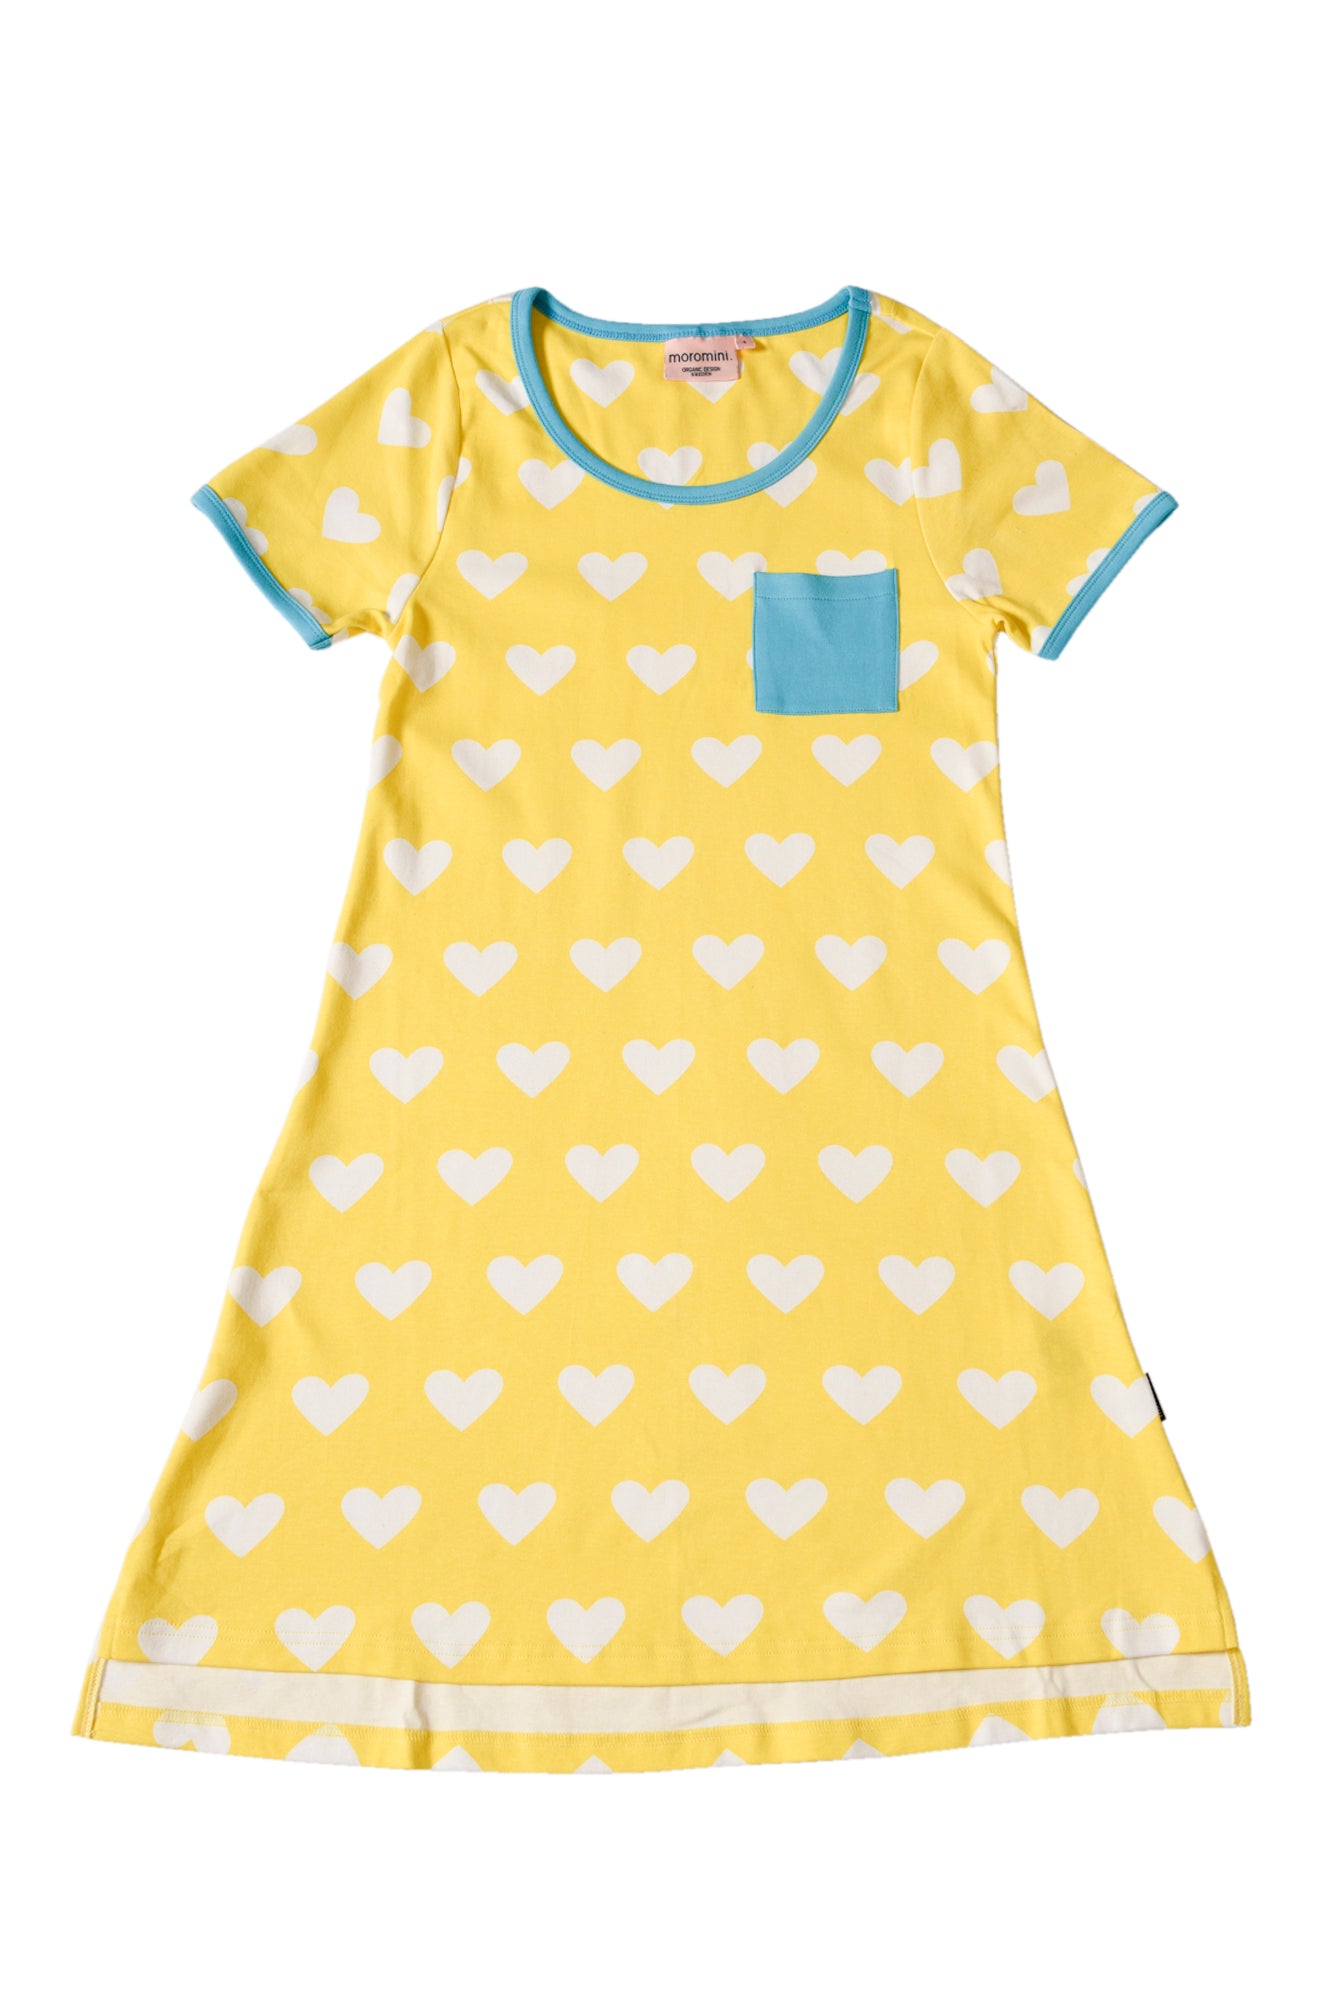 Moromini A-Line Dress - Yellow Hearts